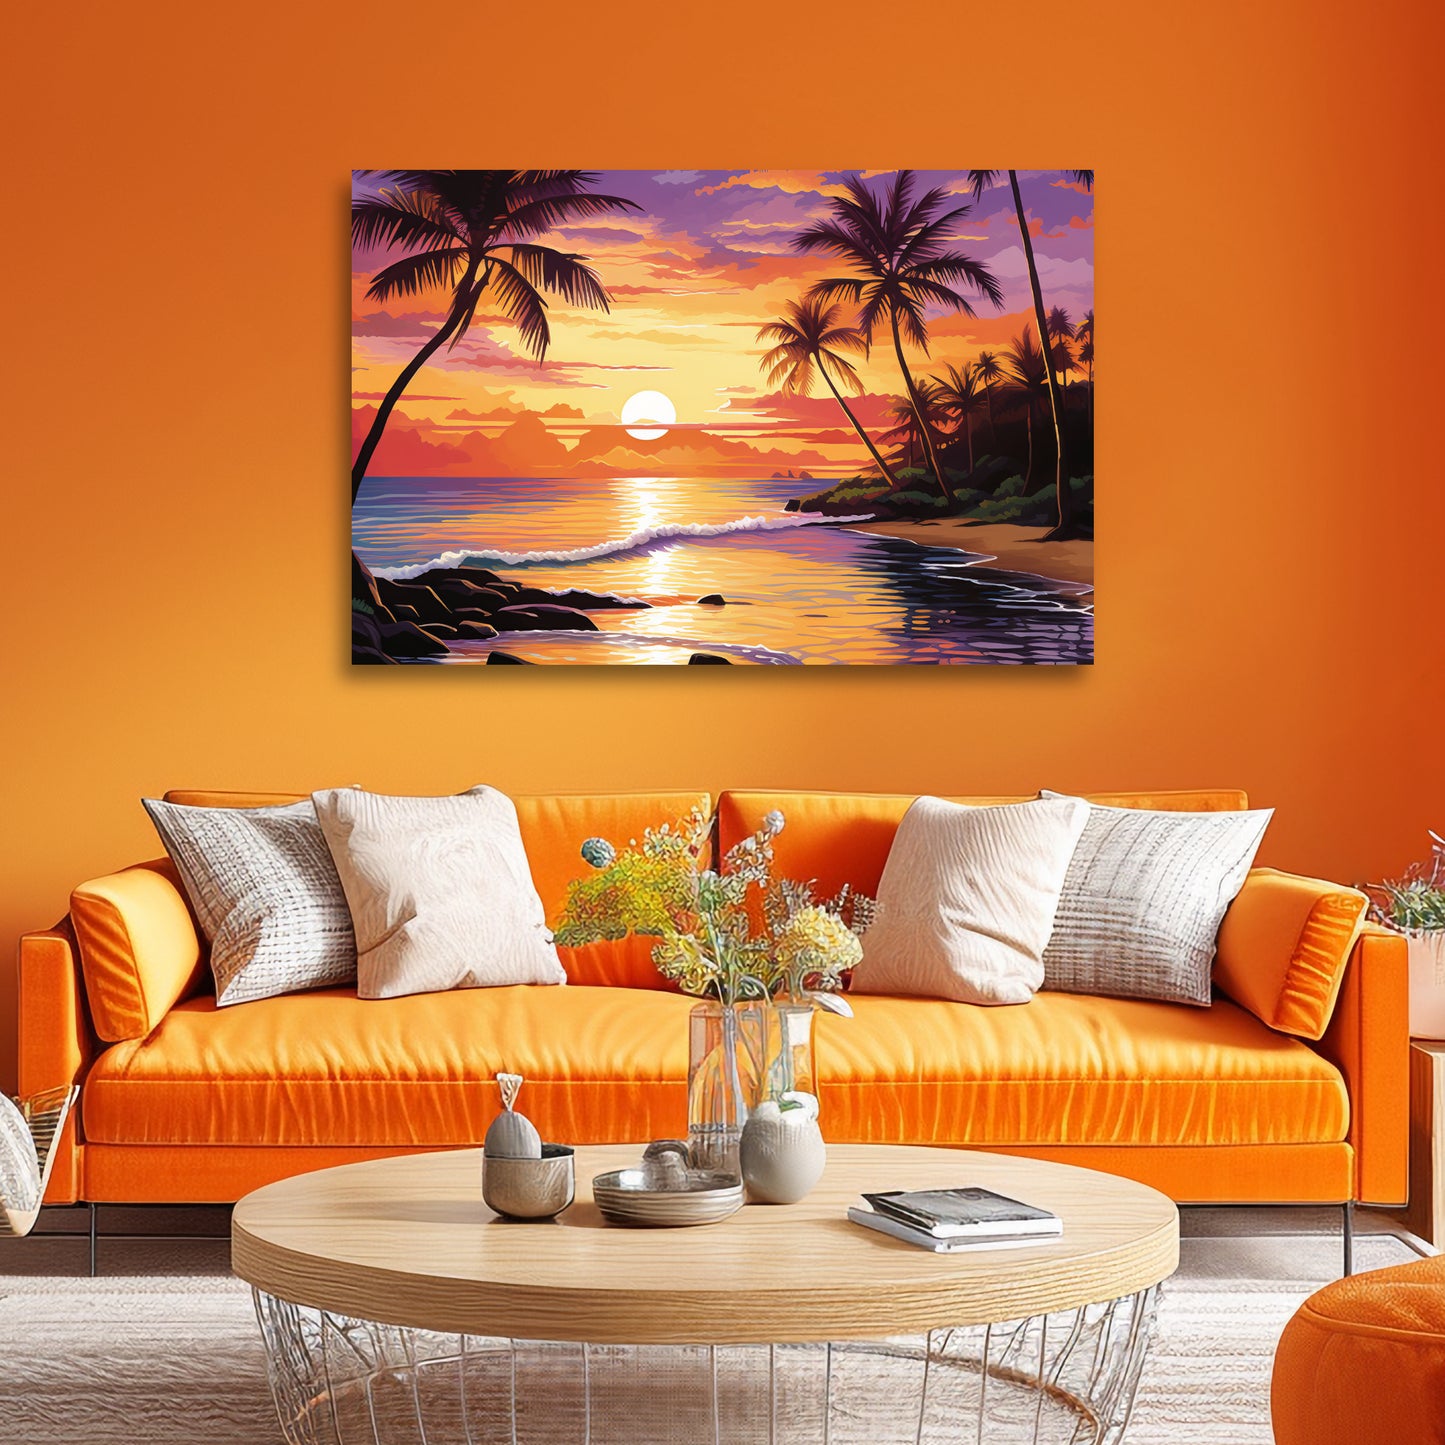 aesthetic tropical sunset canvas print, ocean sunset decor